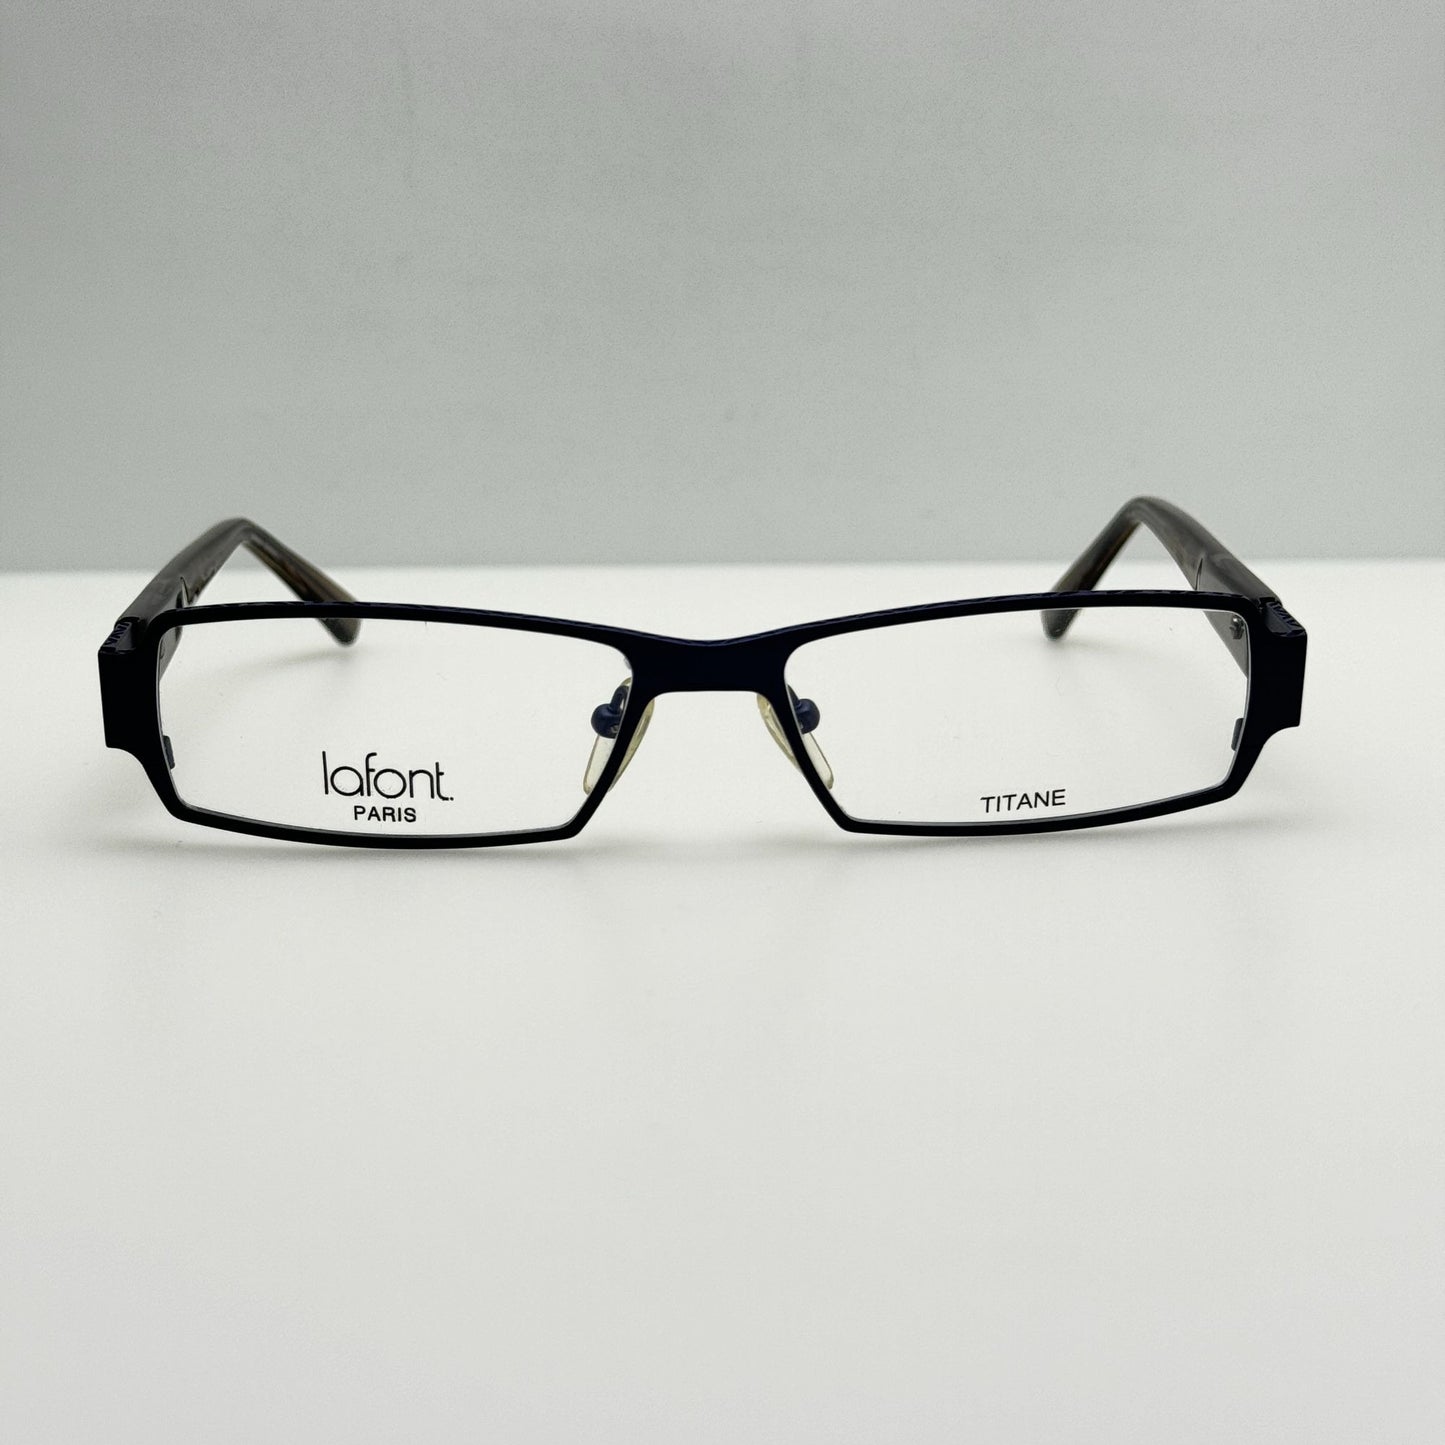 Jean Lafont Eyeglasses Eye Glasses Frames Degas 367 55-16-134